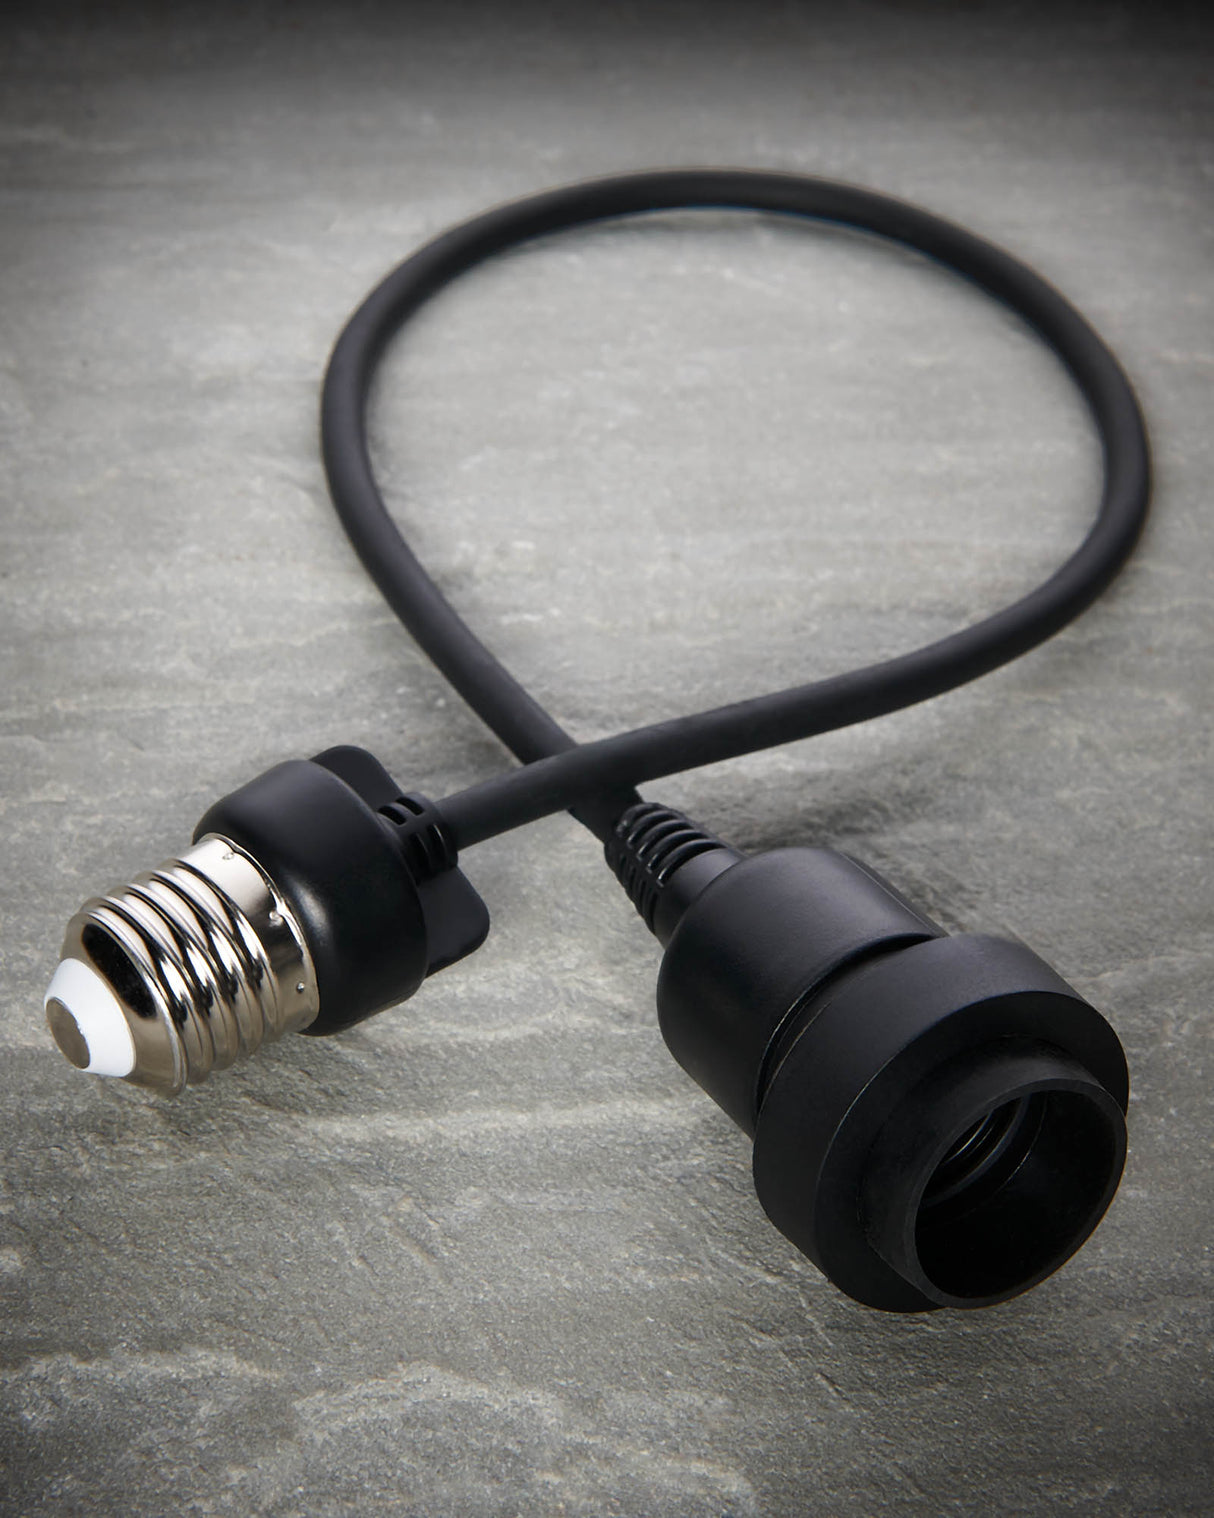 E27 Outdoor Festoon Pendant, Black Rubber Cable,